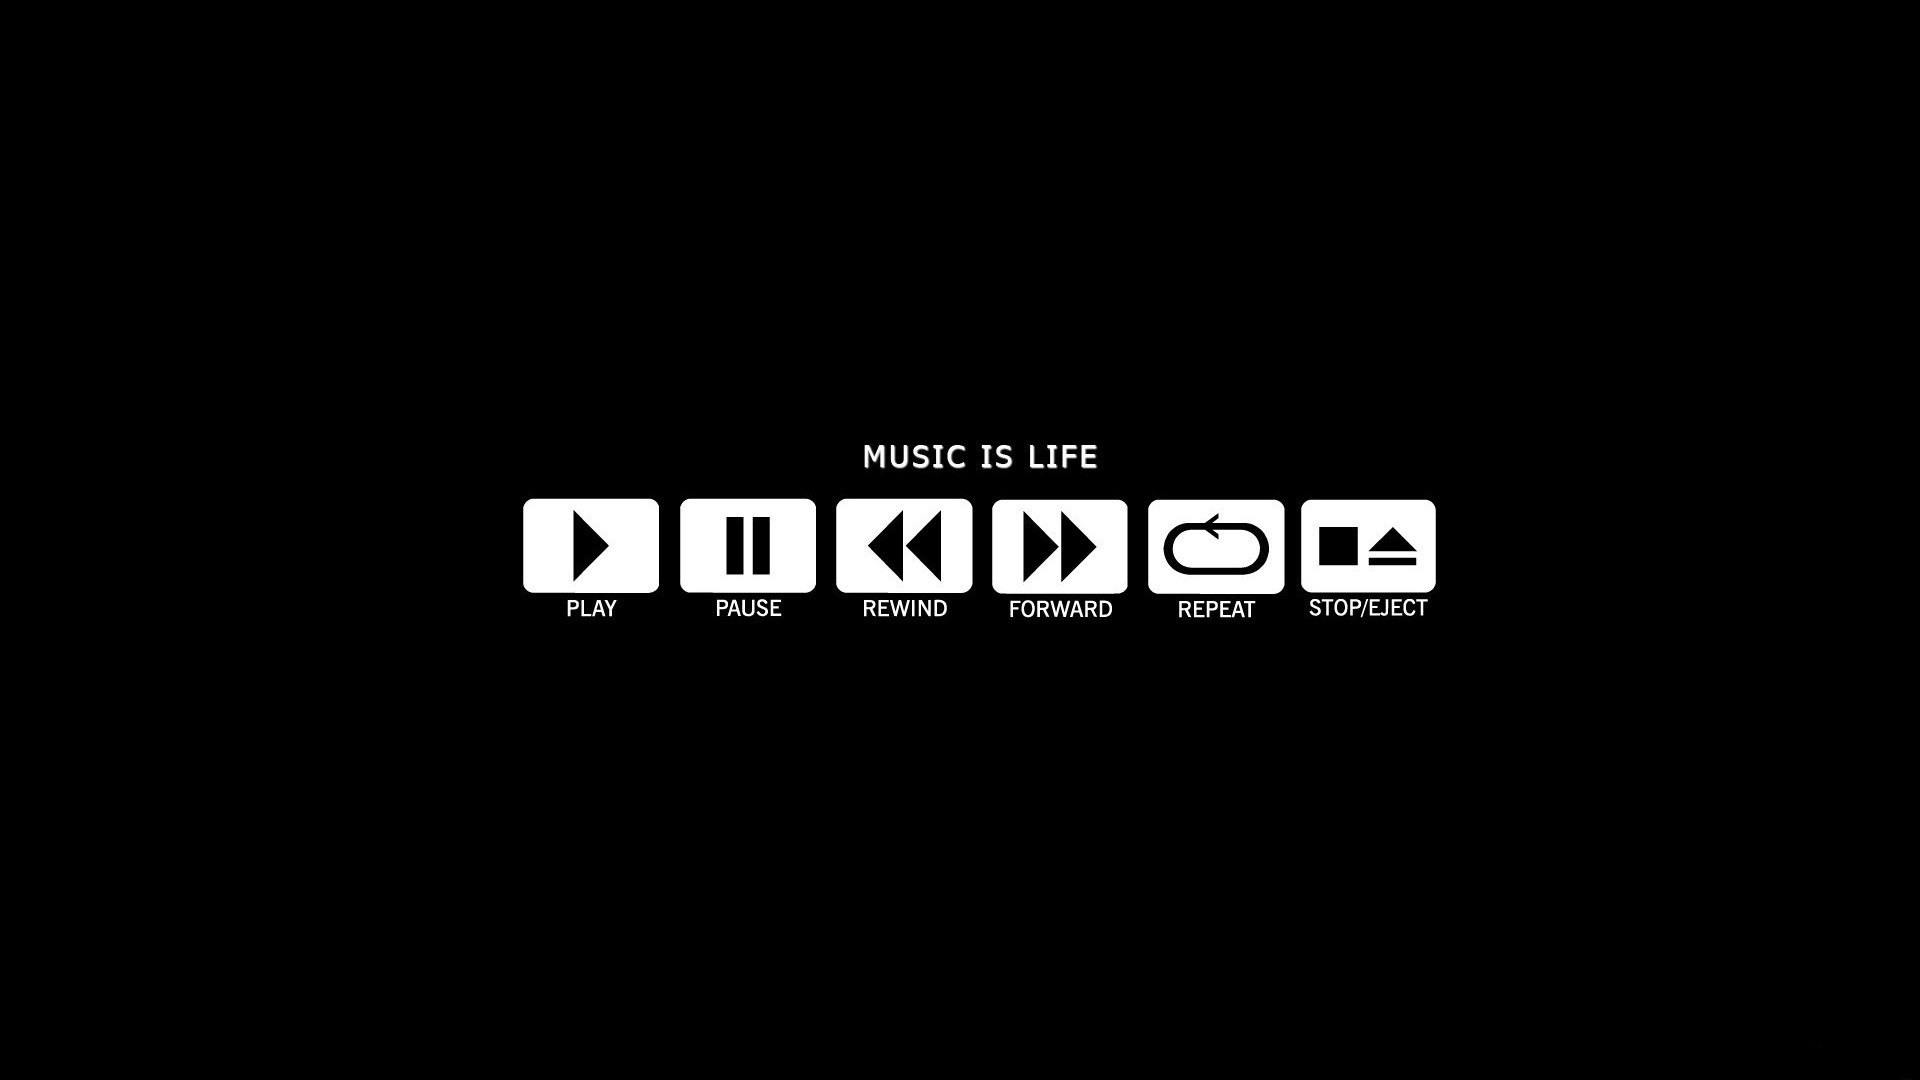 music-is-life-1080p-hd-wallpaper1